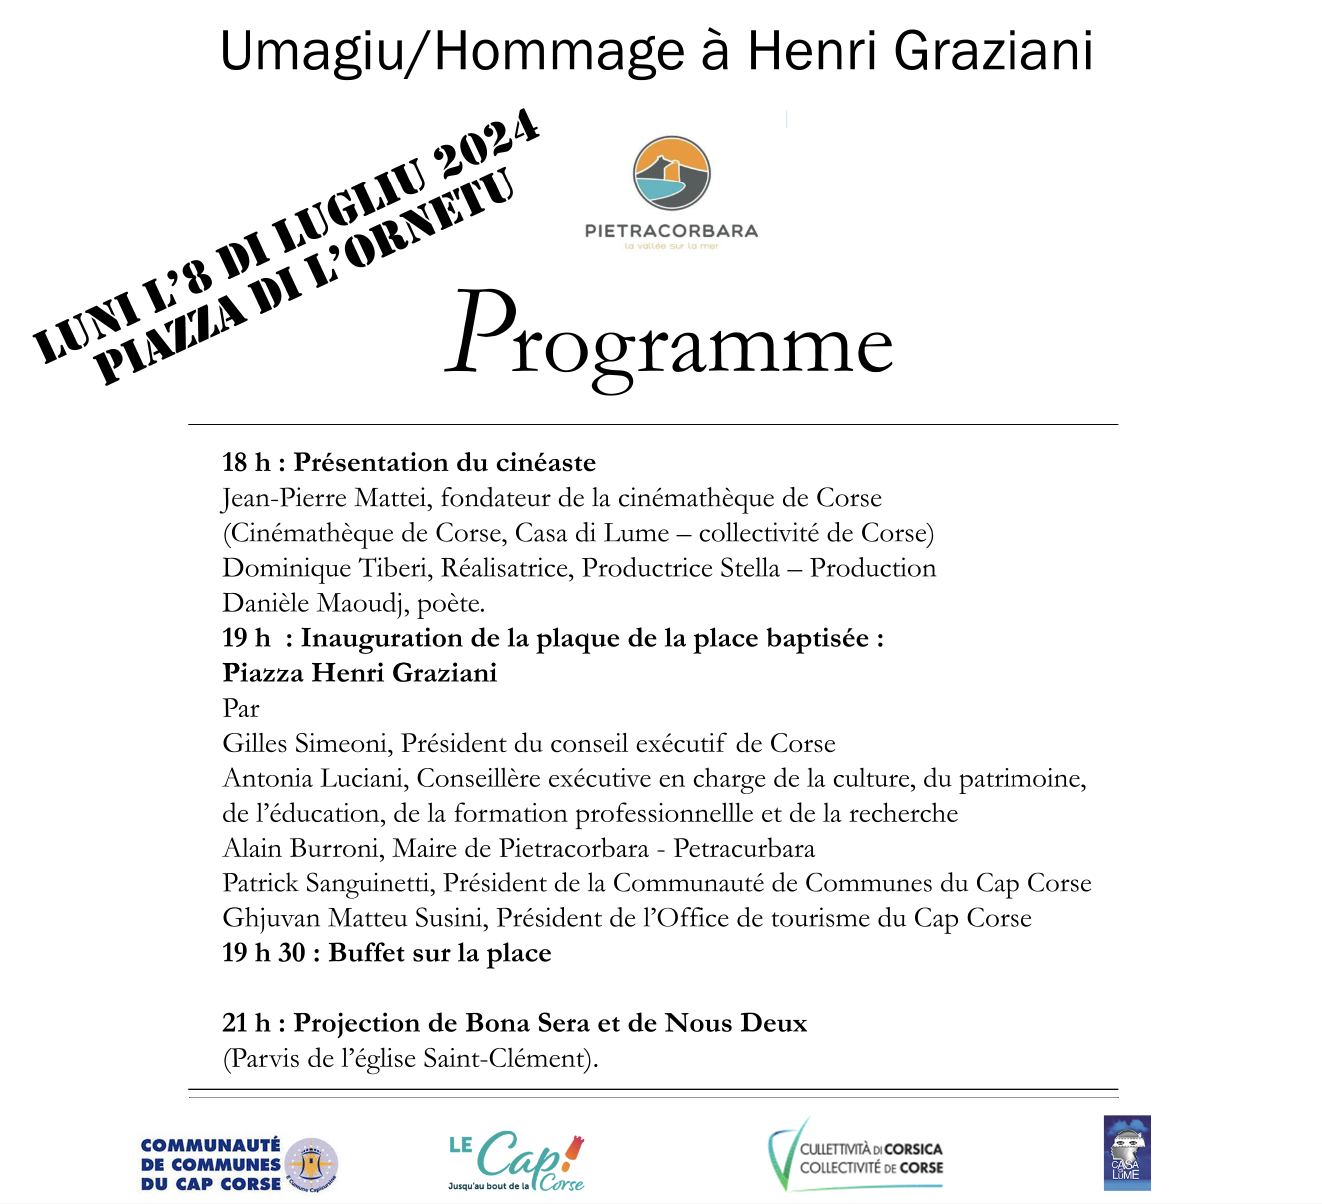 Umagiu / Hommage à Henri Graziani en partenariat avec la Collectivité de Corse, Cinémathèque de Corse "Casa di Lume" - Luni l’8 di lugliu, 18.00 - A Petracurbara